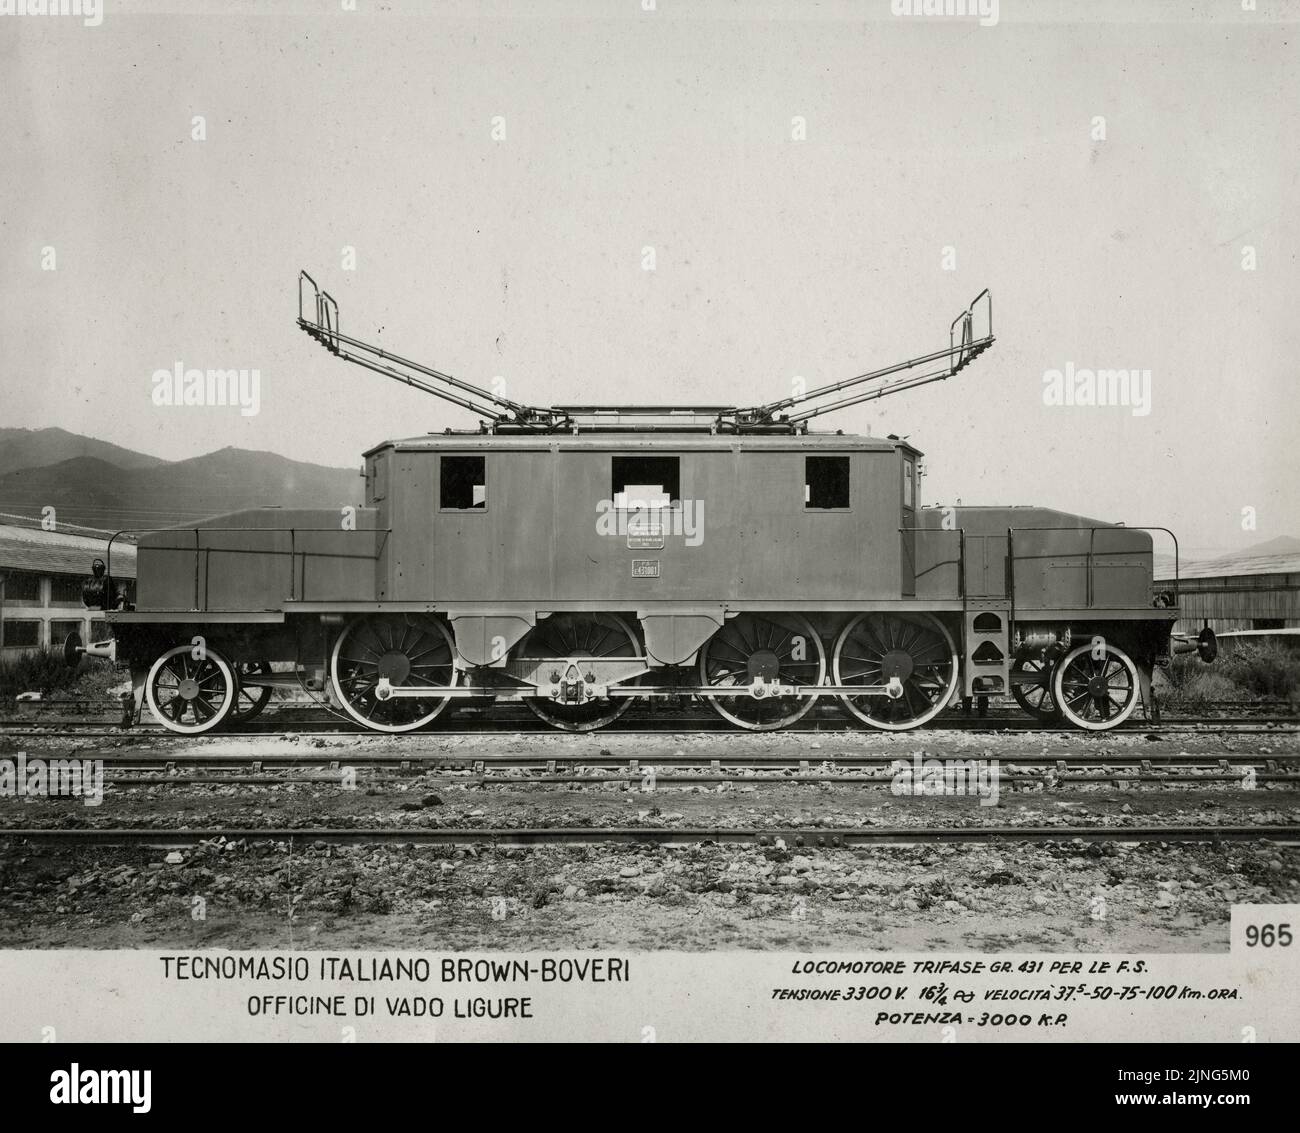 Treni e Tram - Locomotore Trifase GR 431 Tecnomasio Italiano Brown-Boveri Officine di Vado Ligure 1924 Banque D'Images